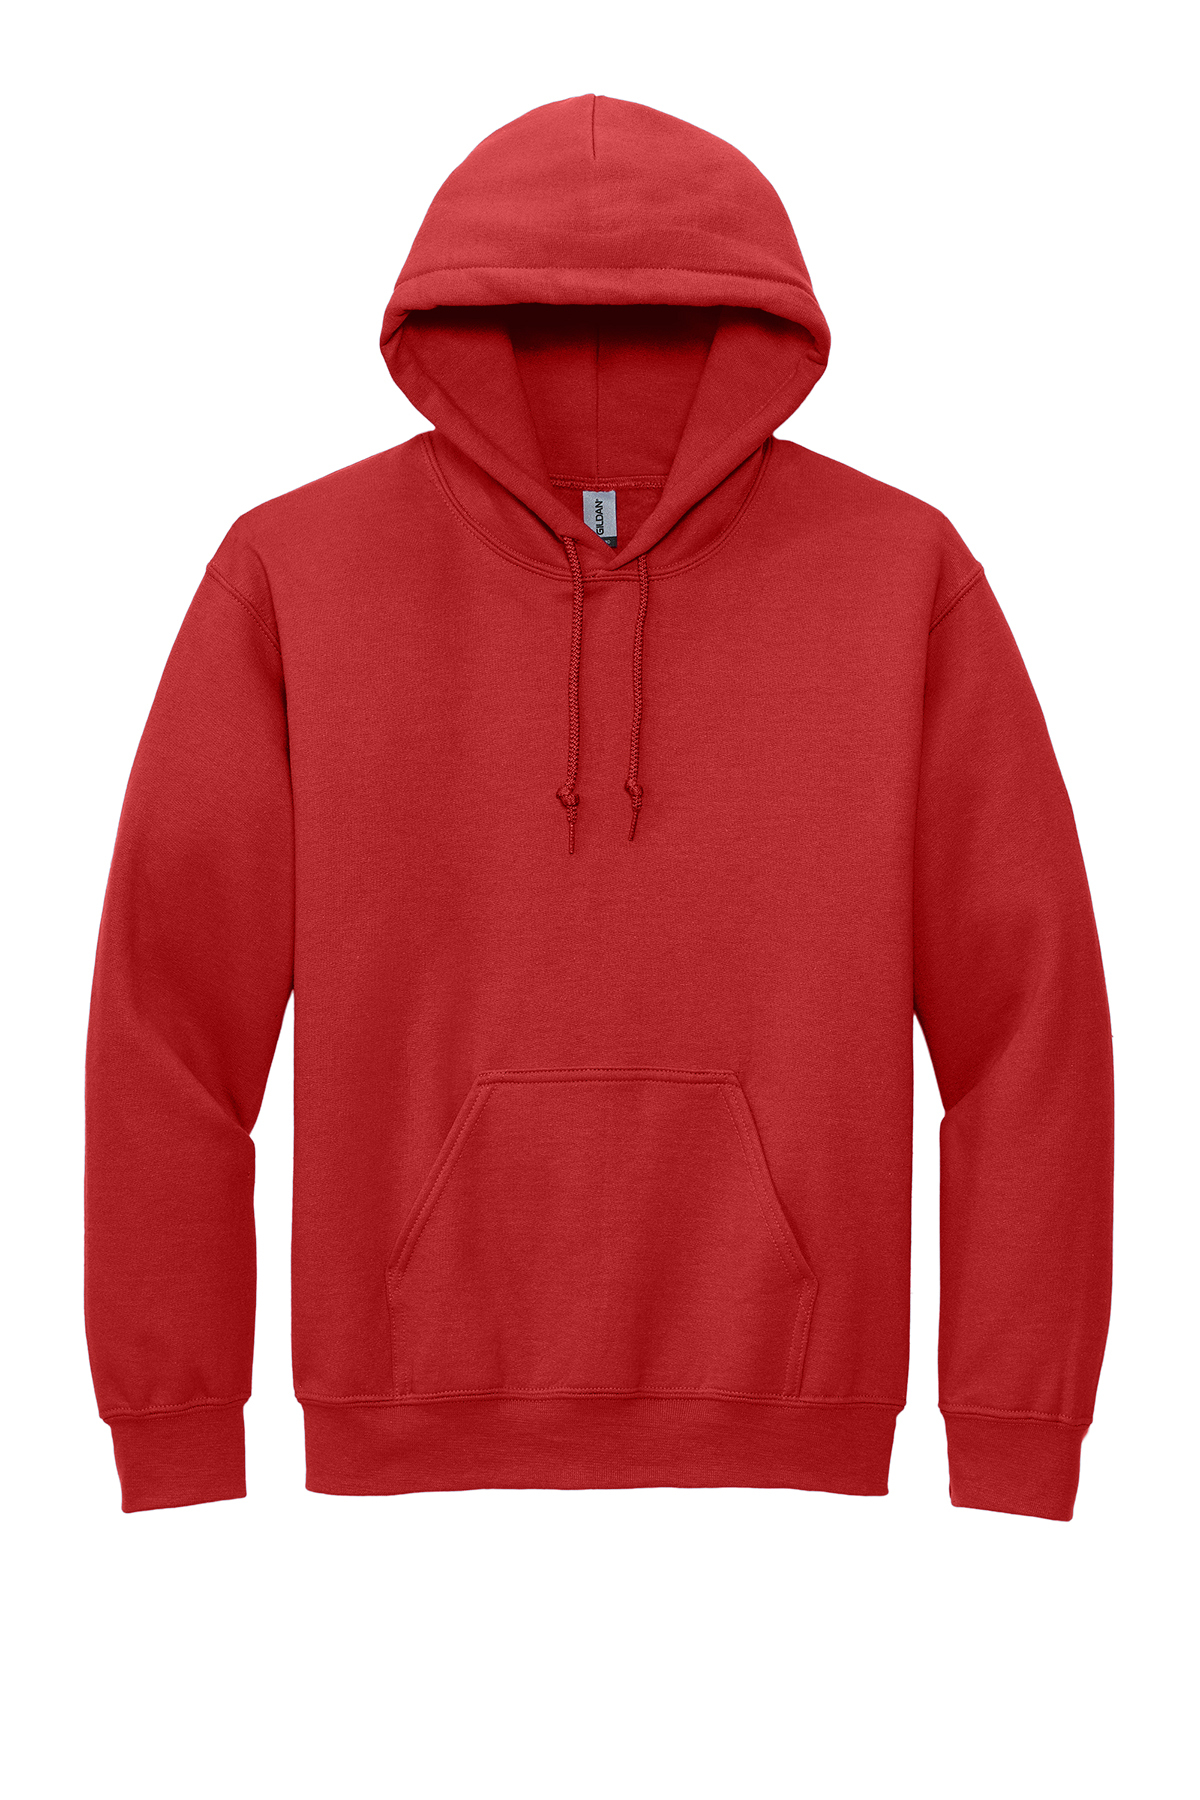 Gildan - | Product | DryBlend SanMar Hooded Pullover Sweatshirt